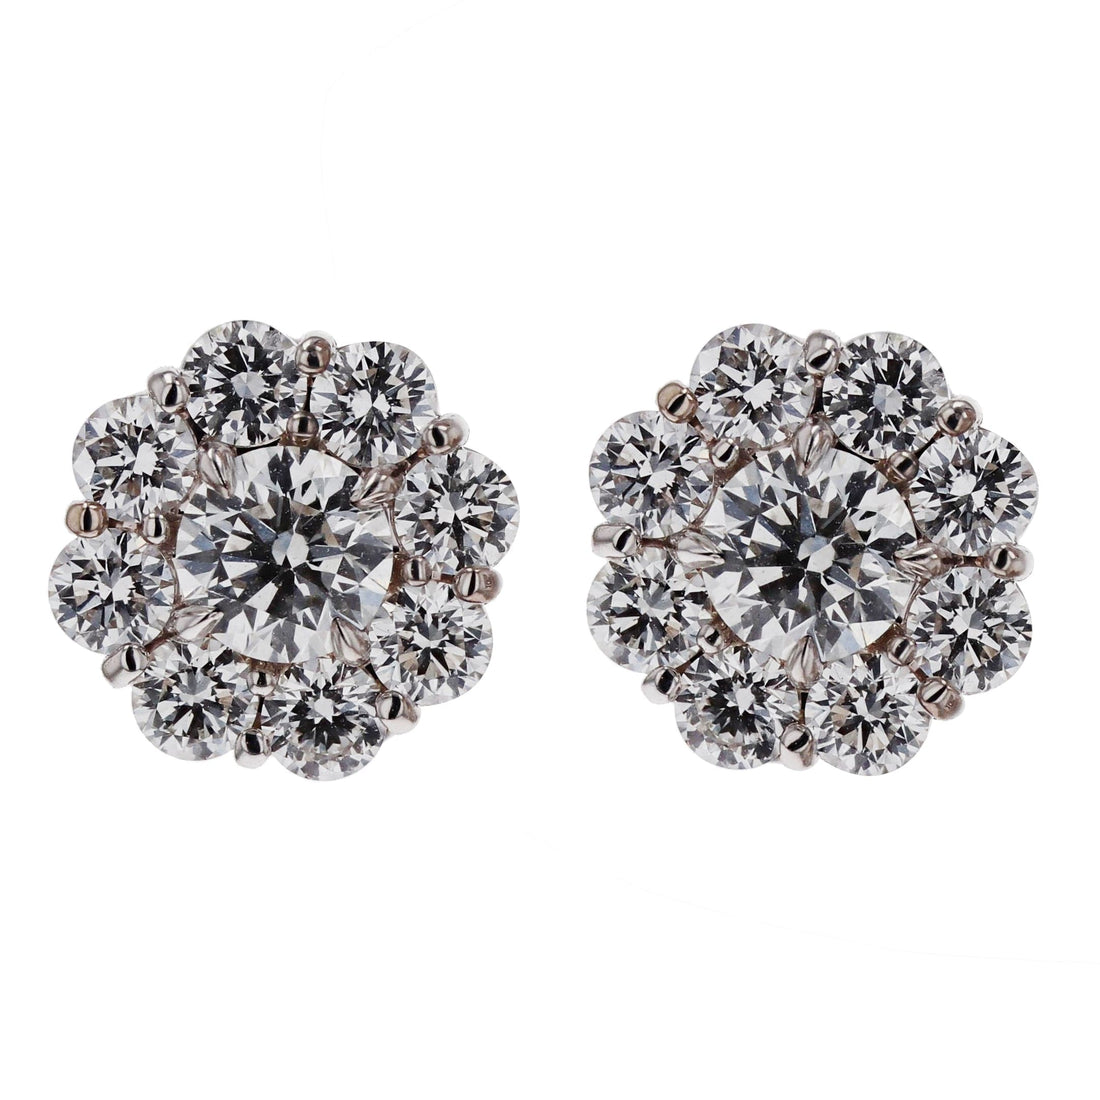 Skeie's Legacy Collection Diamond Cluster Stud Earrings in White Gold - Skeie's Jewelers